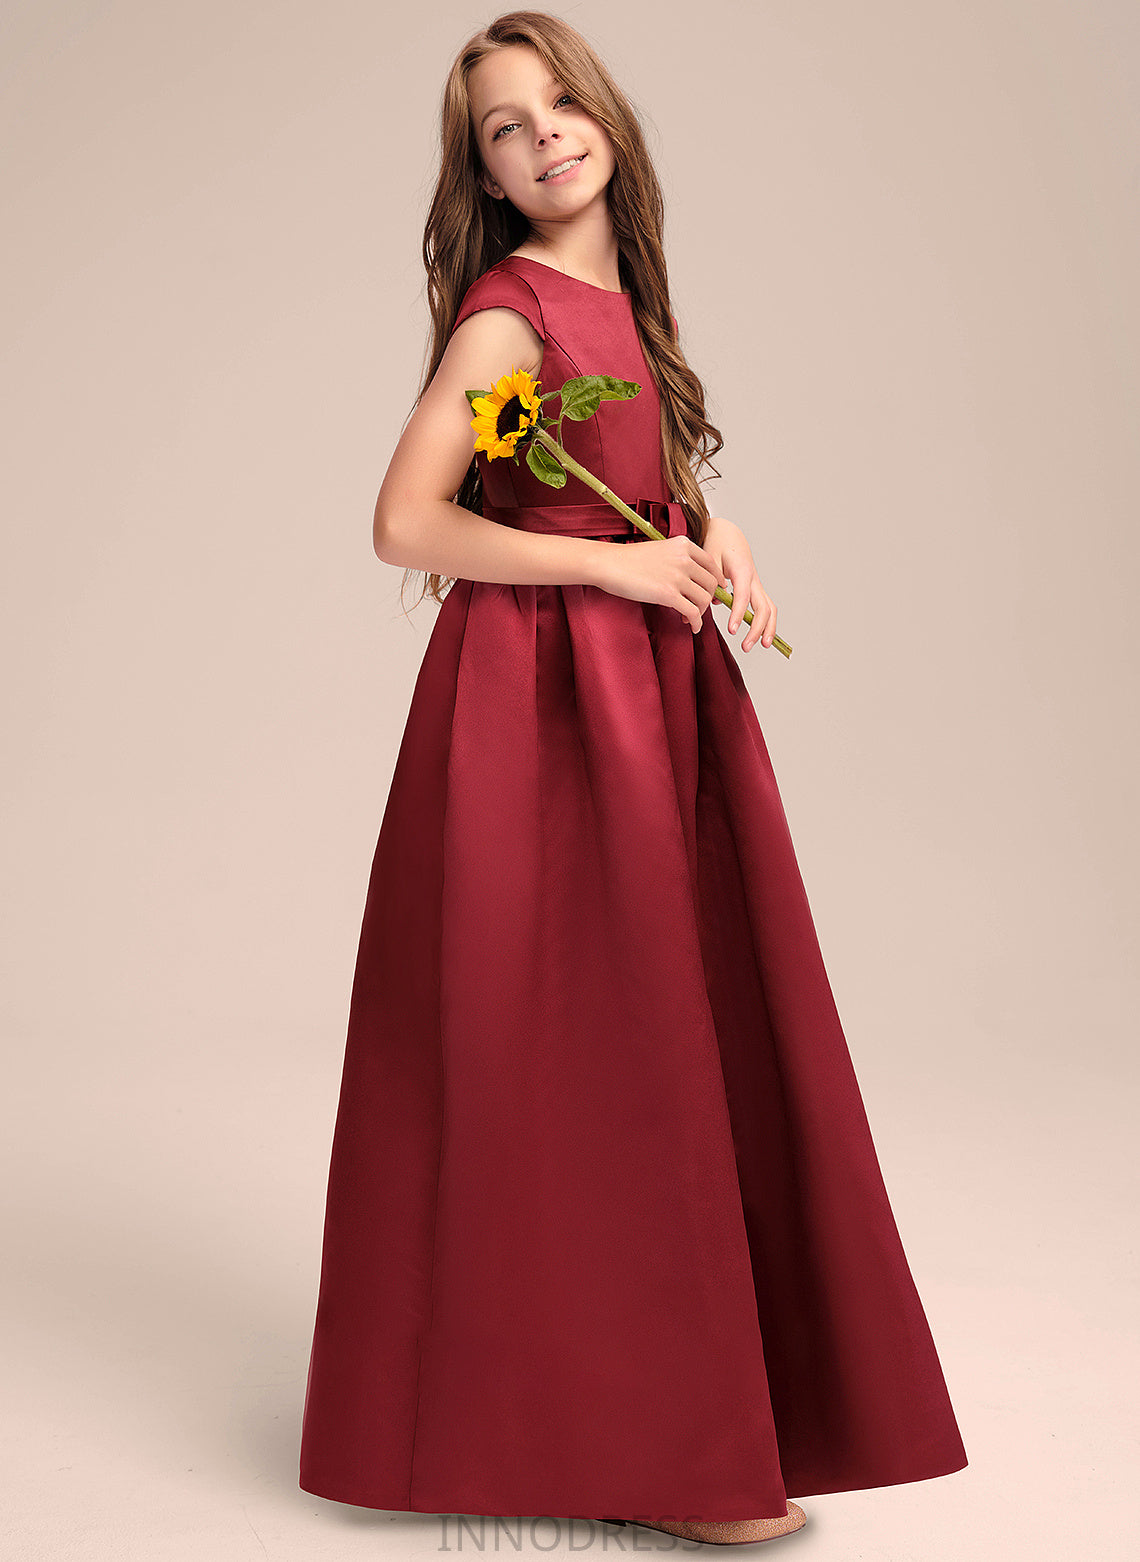 Scoop A-Line Katelynn Pockets Junior Bridesmaid Dresses Floor-Length With Neck Bow(s) Satin